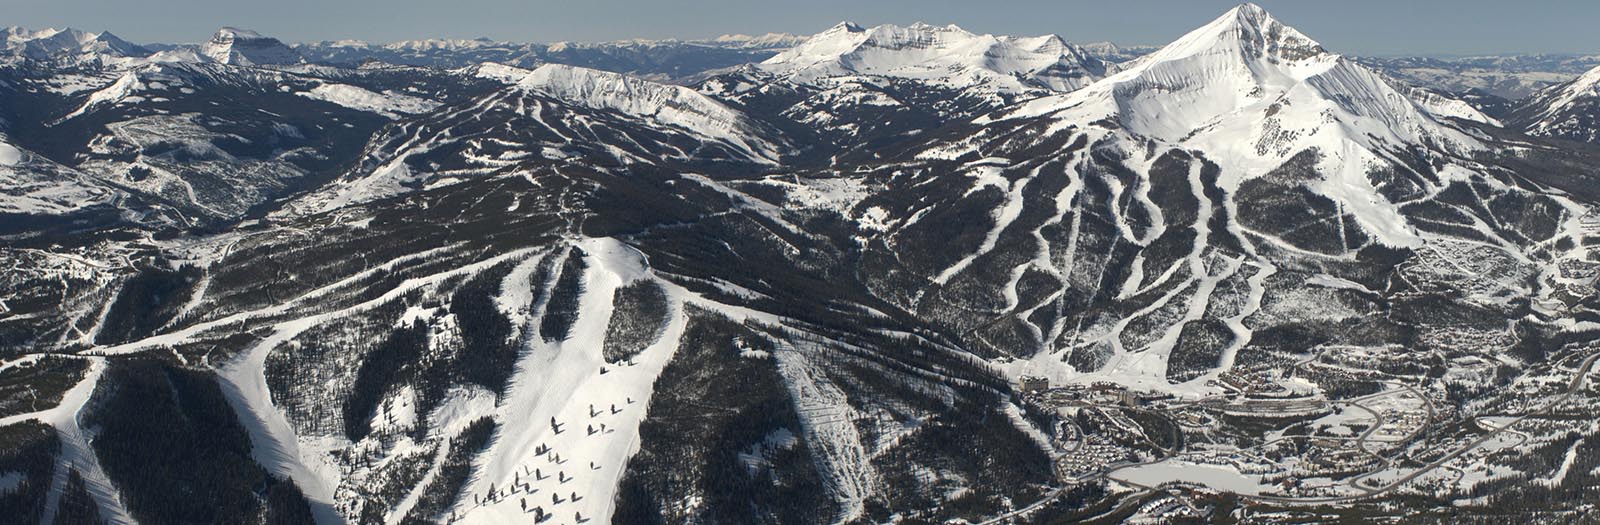 montana ski resort, montana ski vacations, montana ski vacation packages 